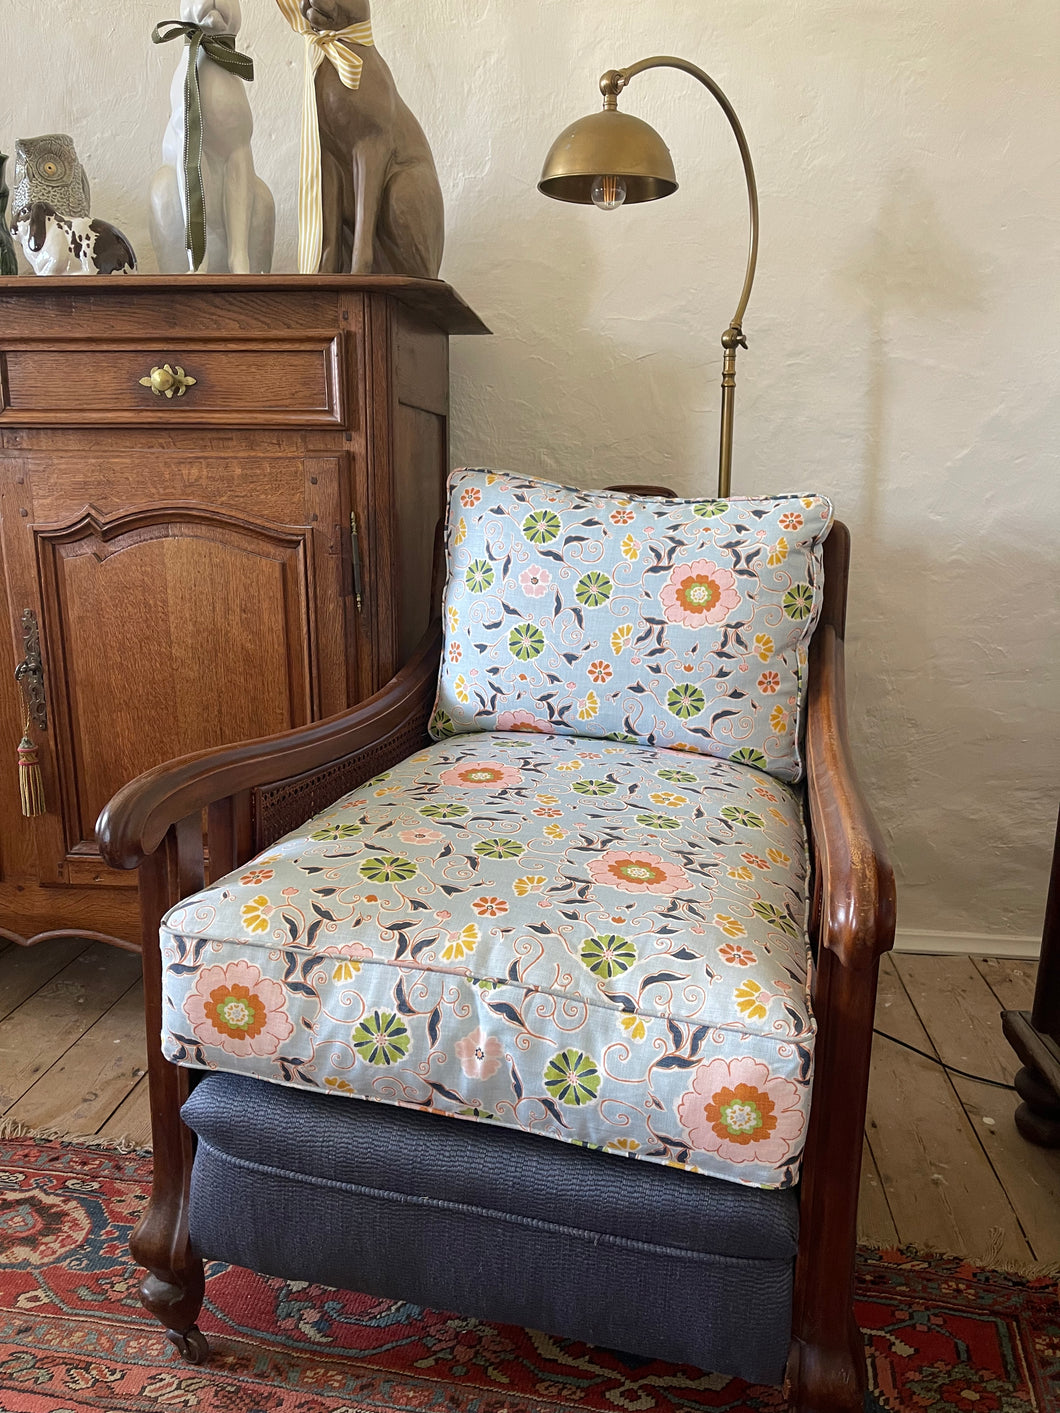 Antique Jacobean chair recovered in Anna Spiro “Leilani” fabric